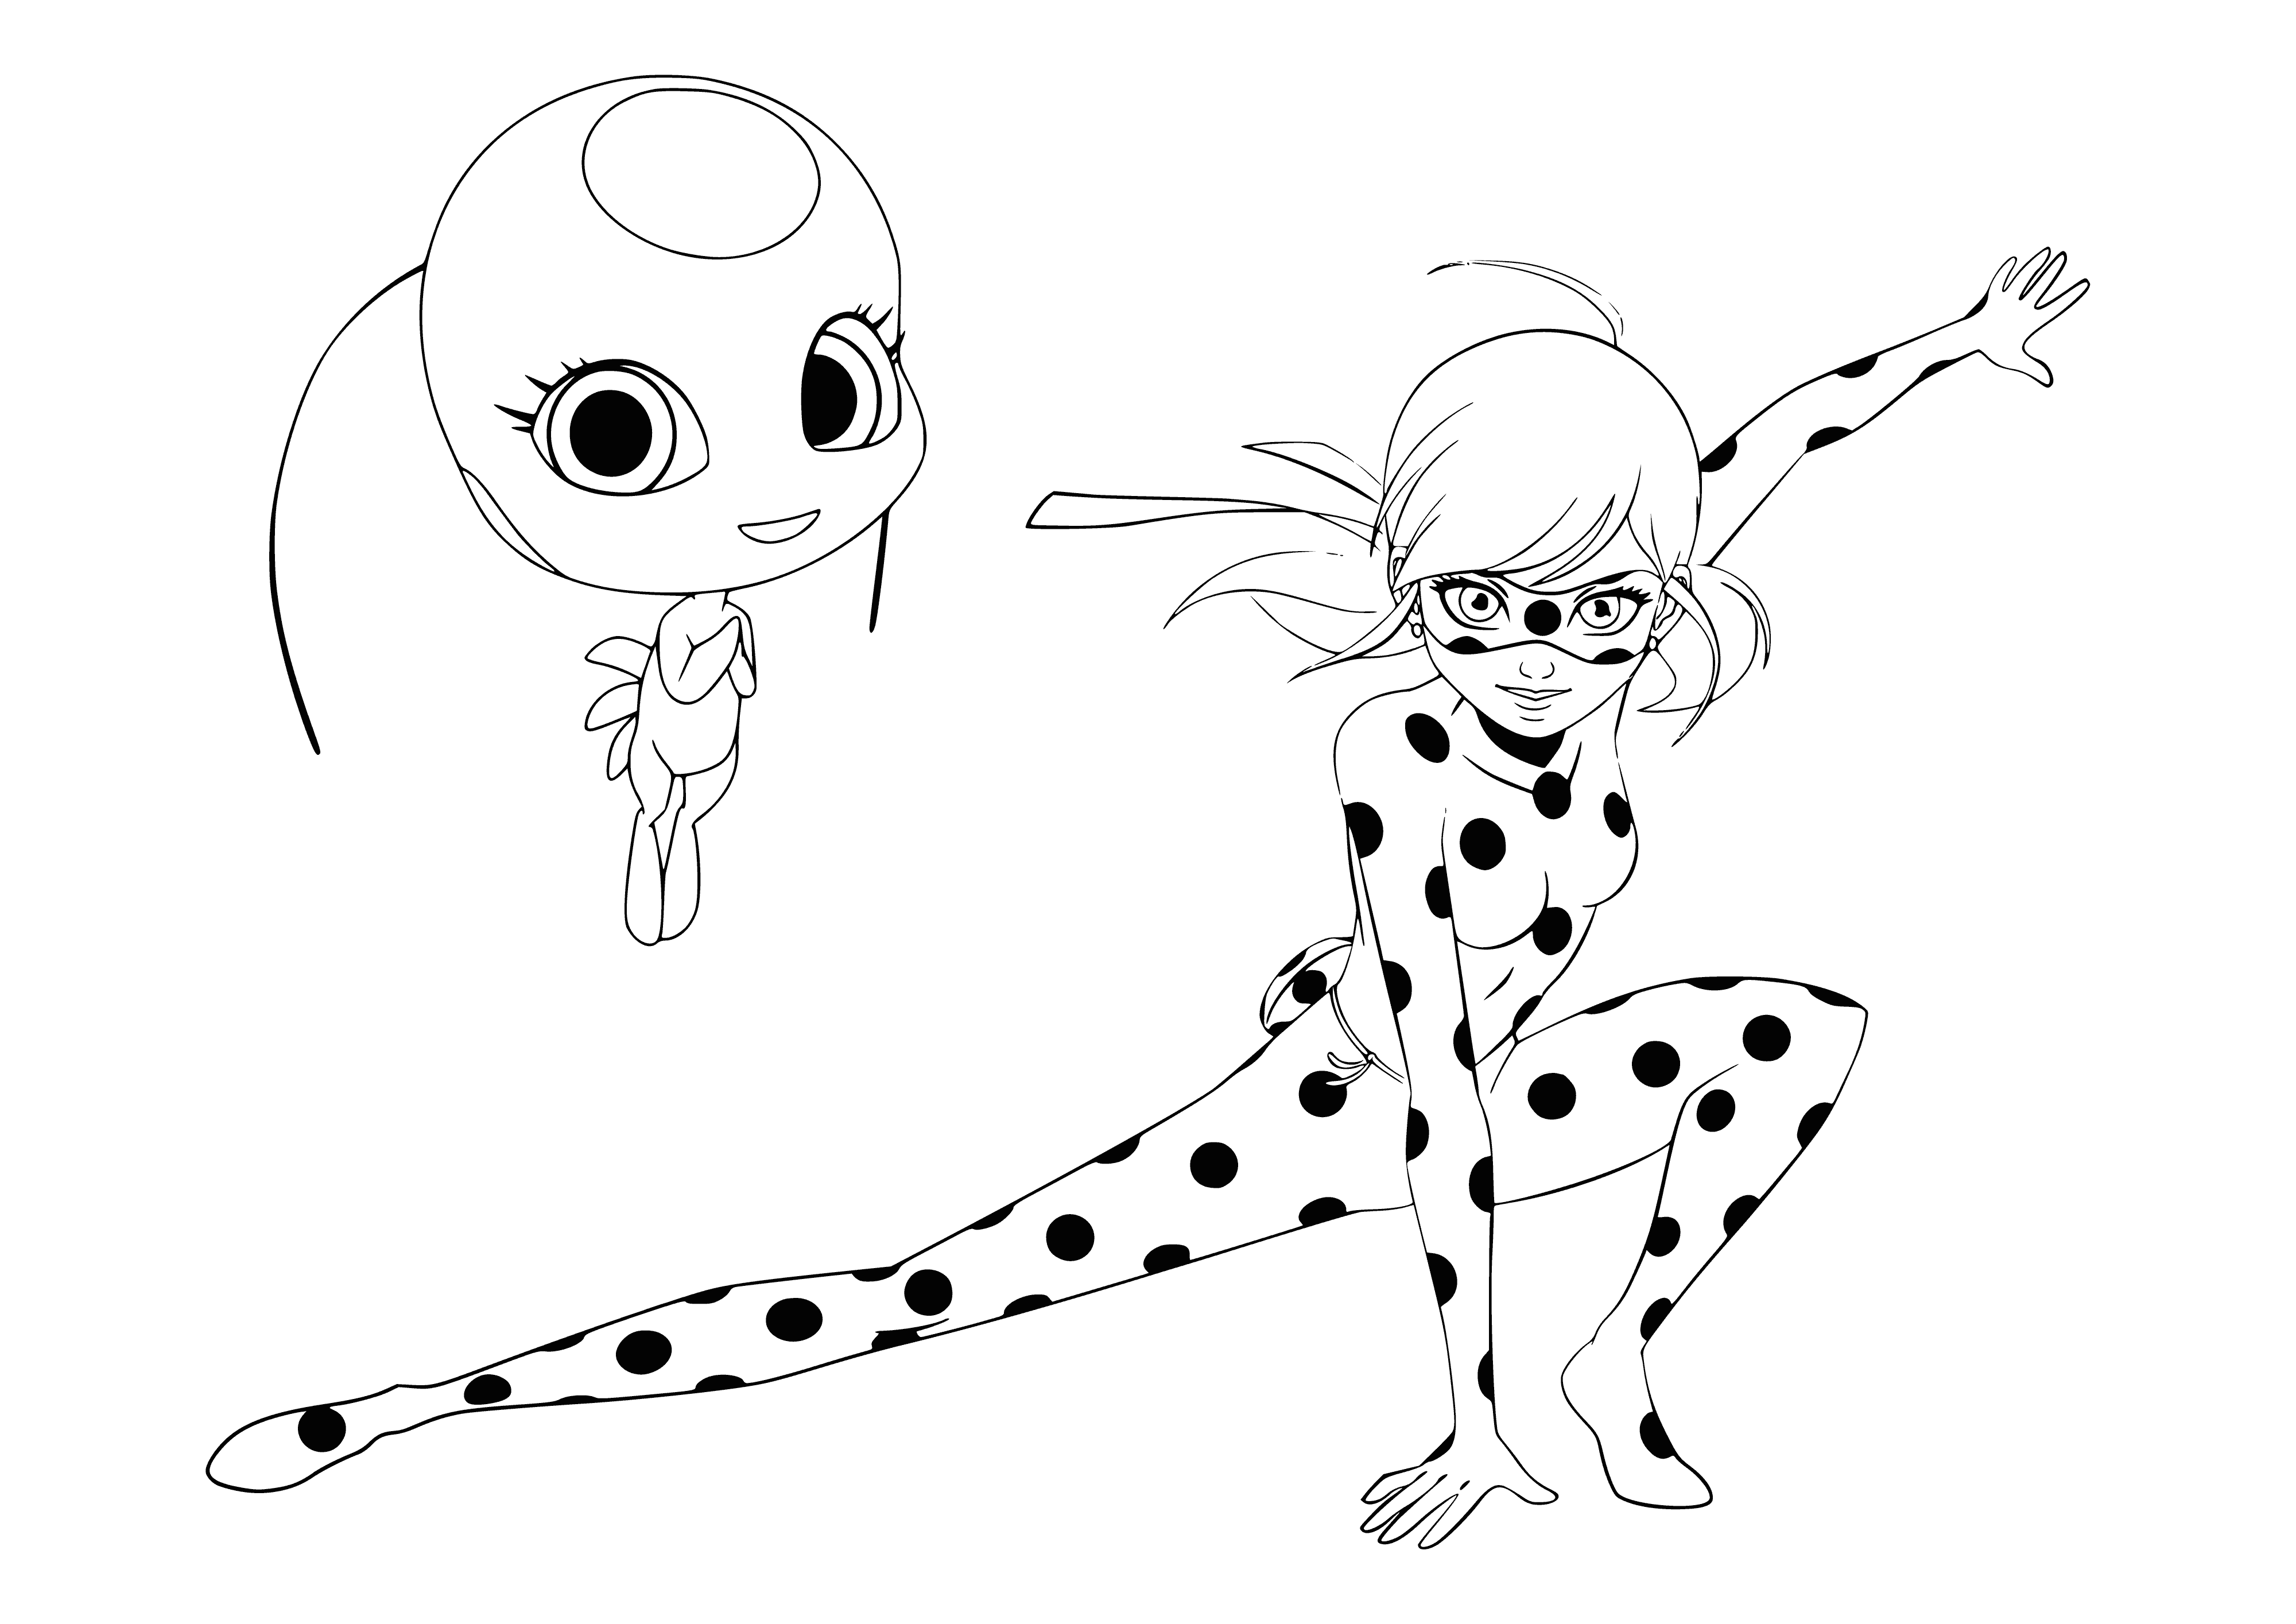 Lady Bug et Tikki coloriage